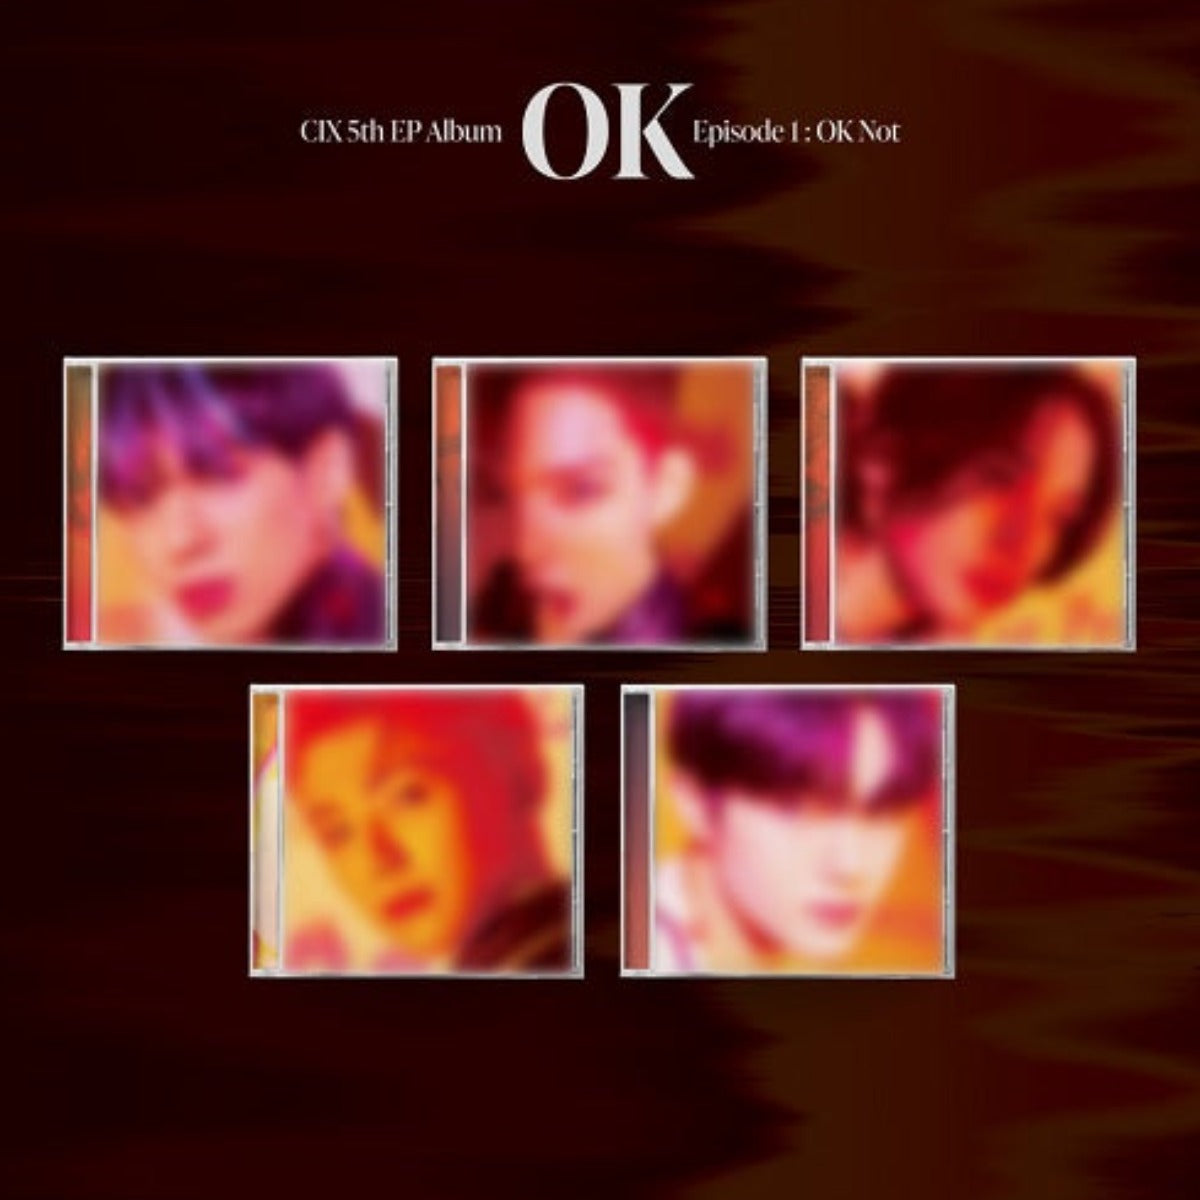 CIX Mini Album Vol. 5 - OK Episode 1 : OK Not (Jewel Version) (Random Cover)